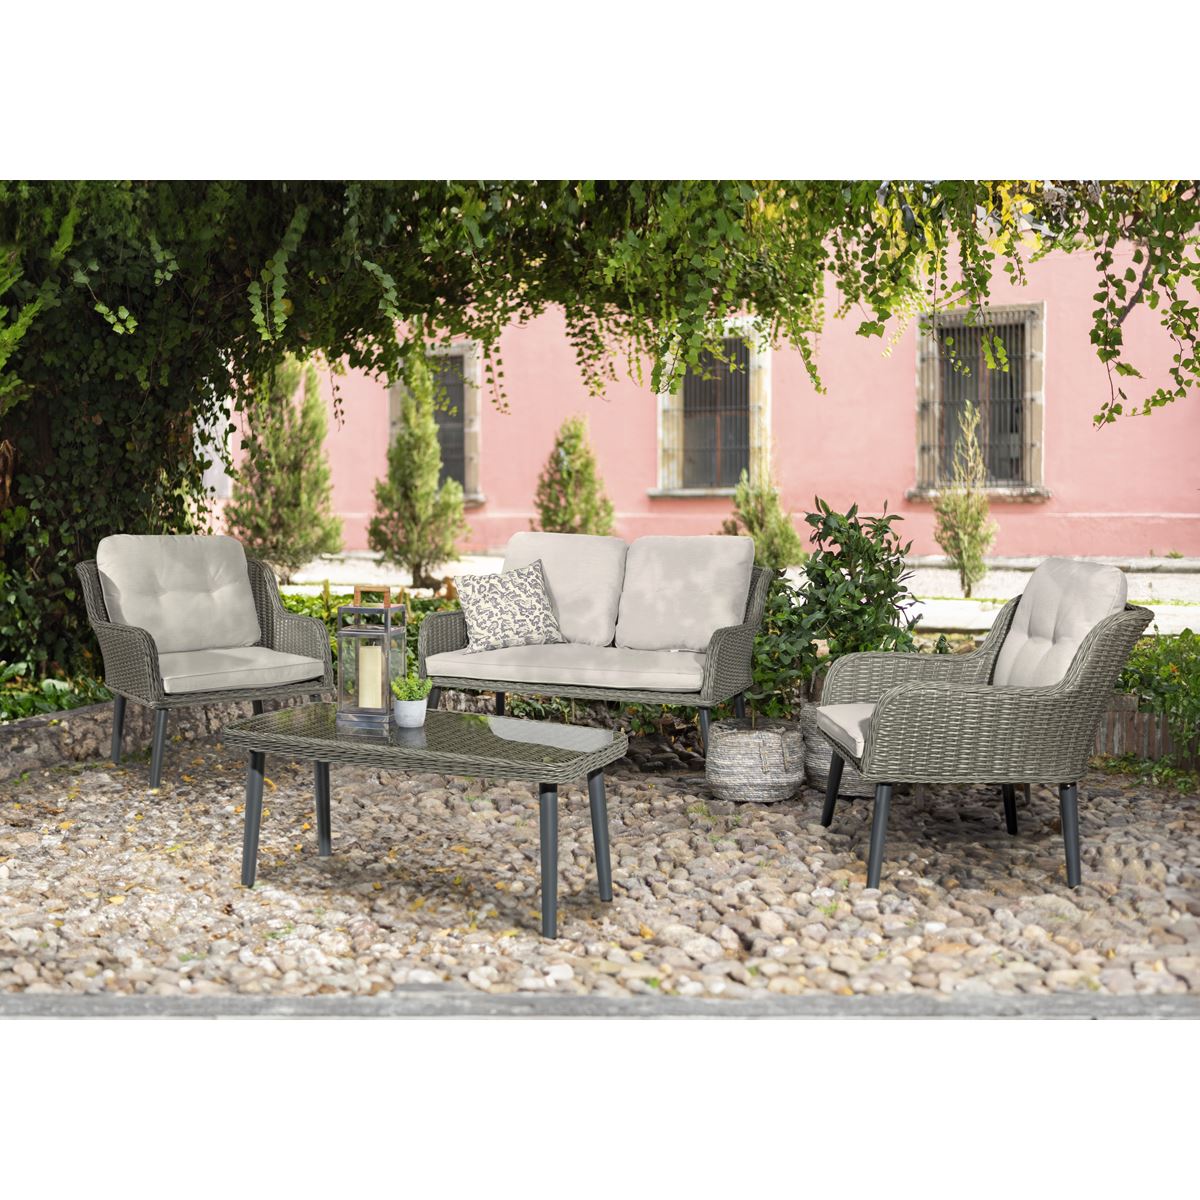 Dellonda Buxton 4 Piece Rattan Wicker Outdoor Lounge Set with Double Sofa, Grey